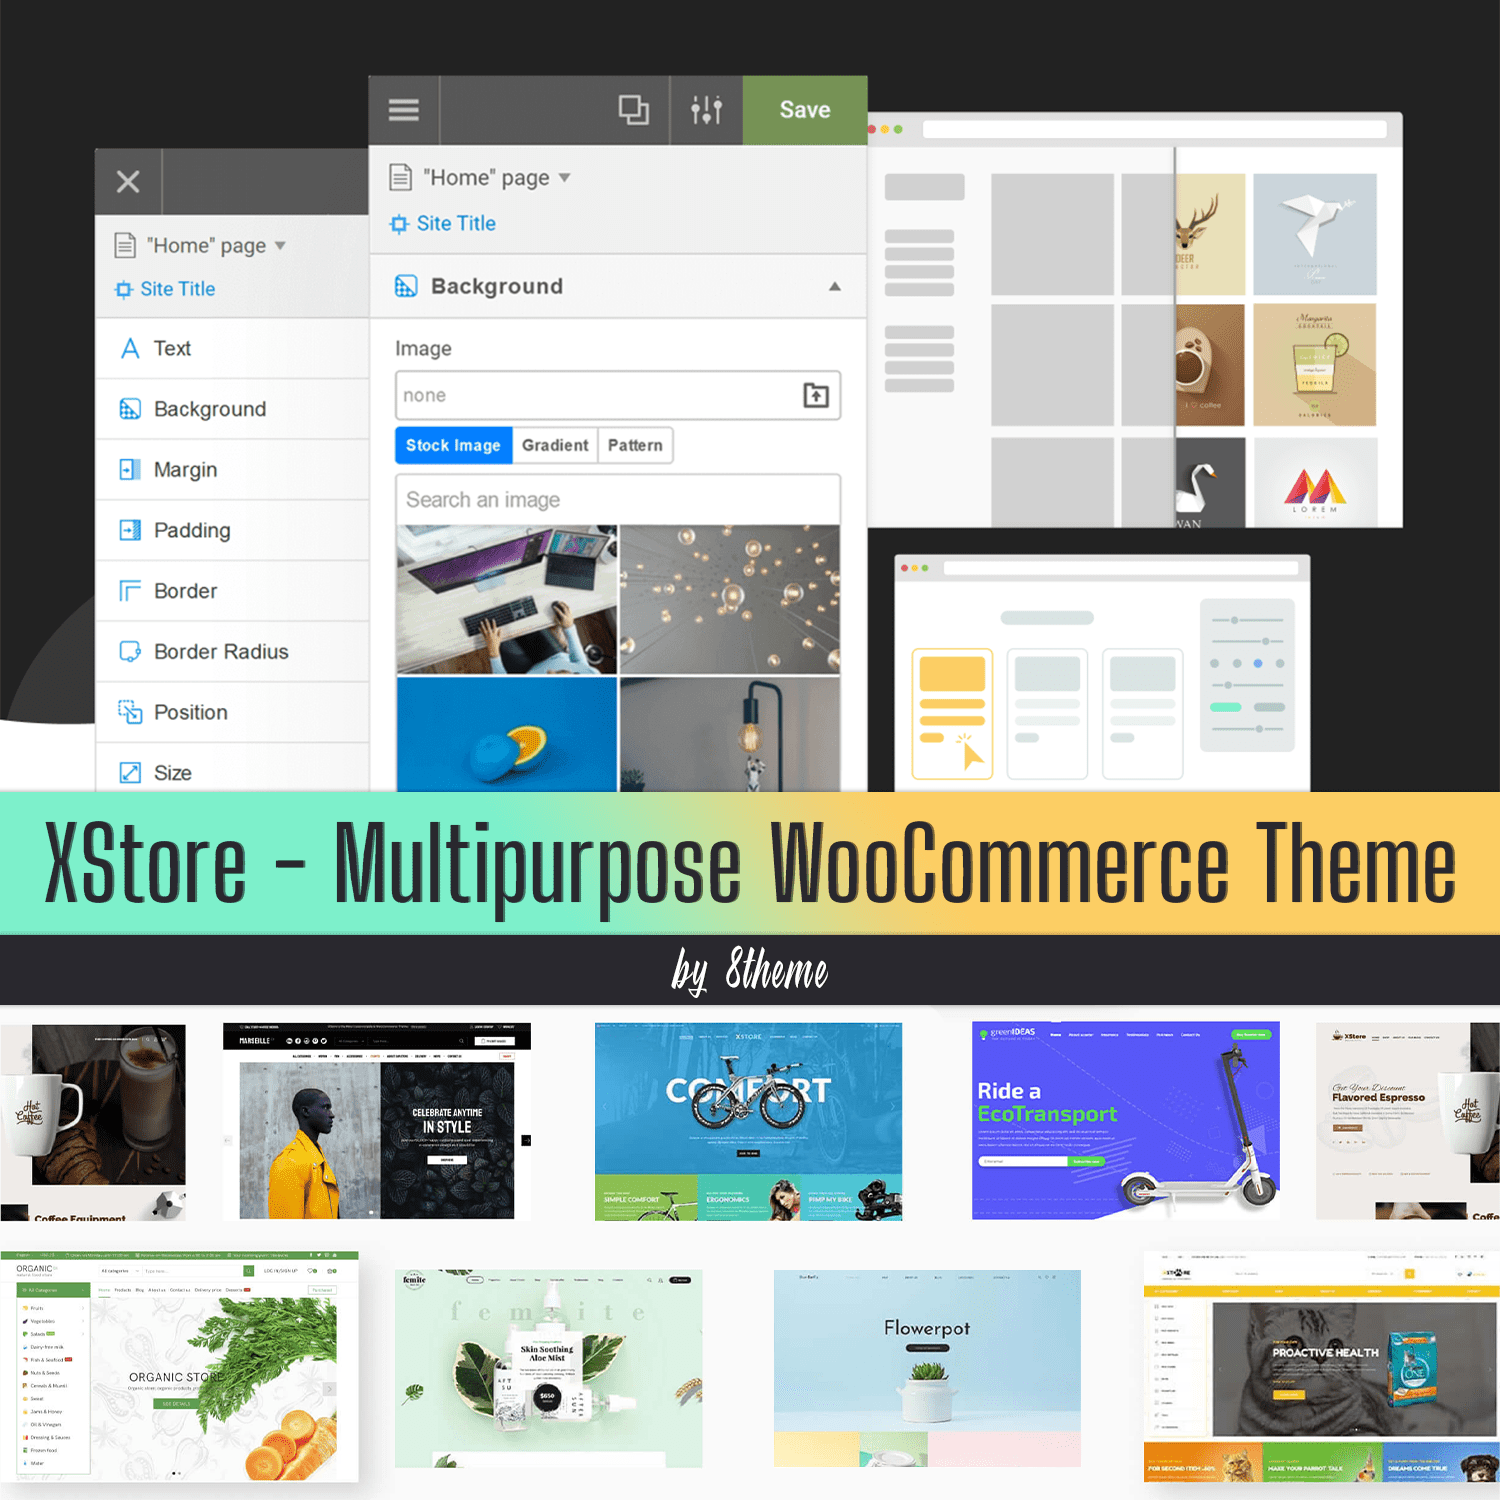 XStore - Multipurpose WooCommerce Theme cover.